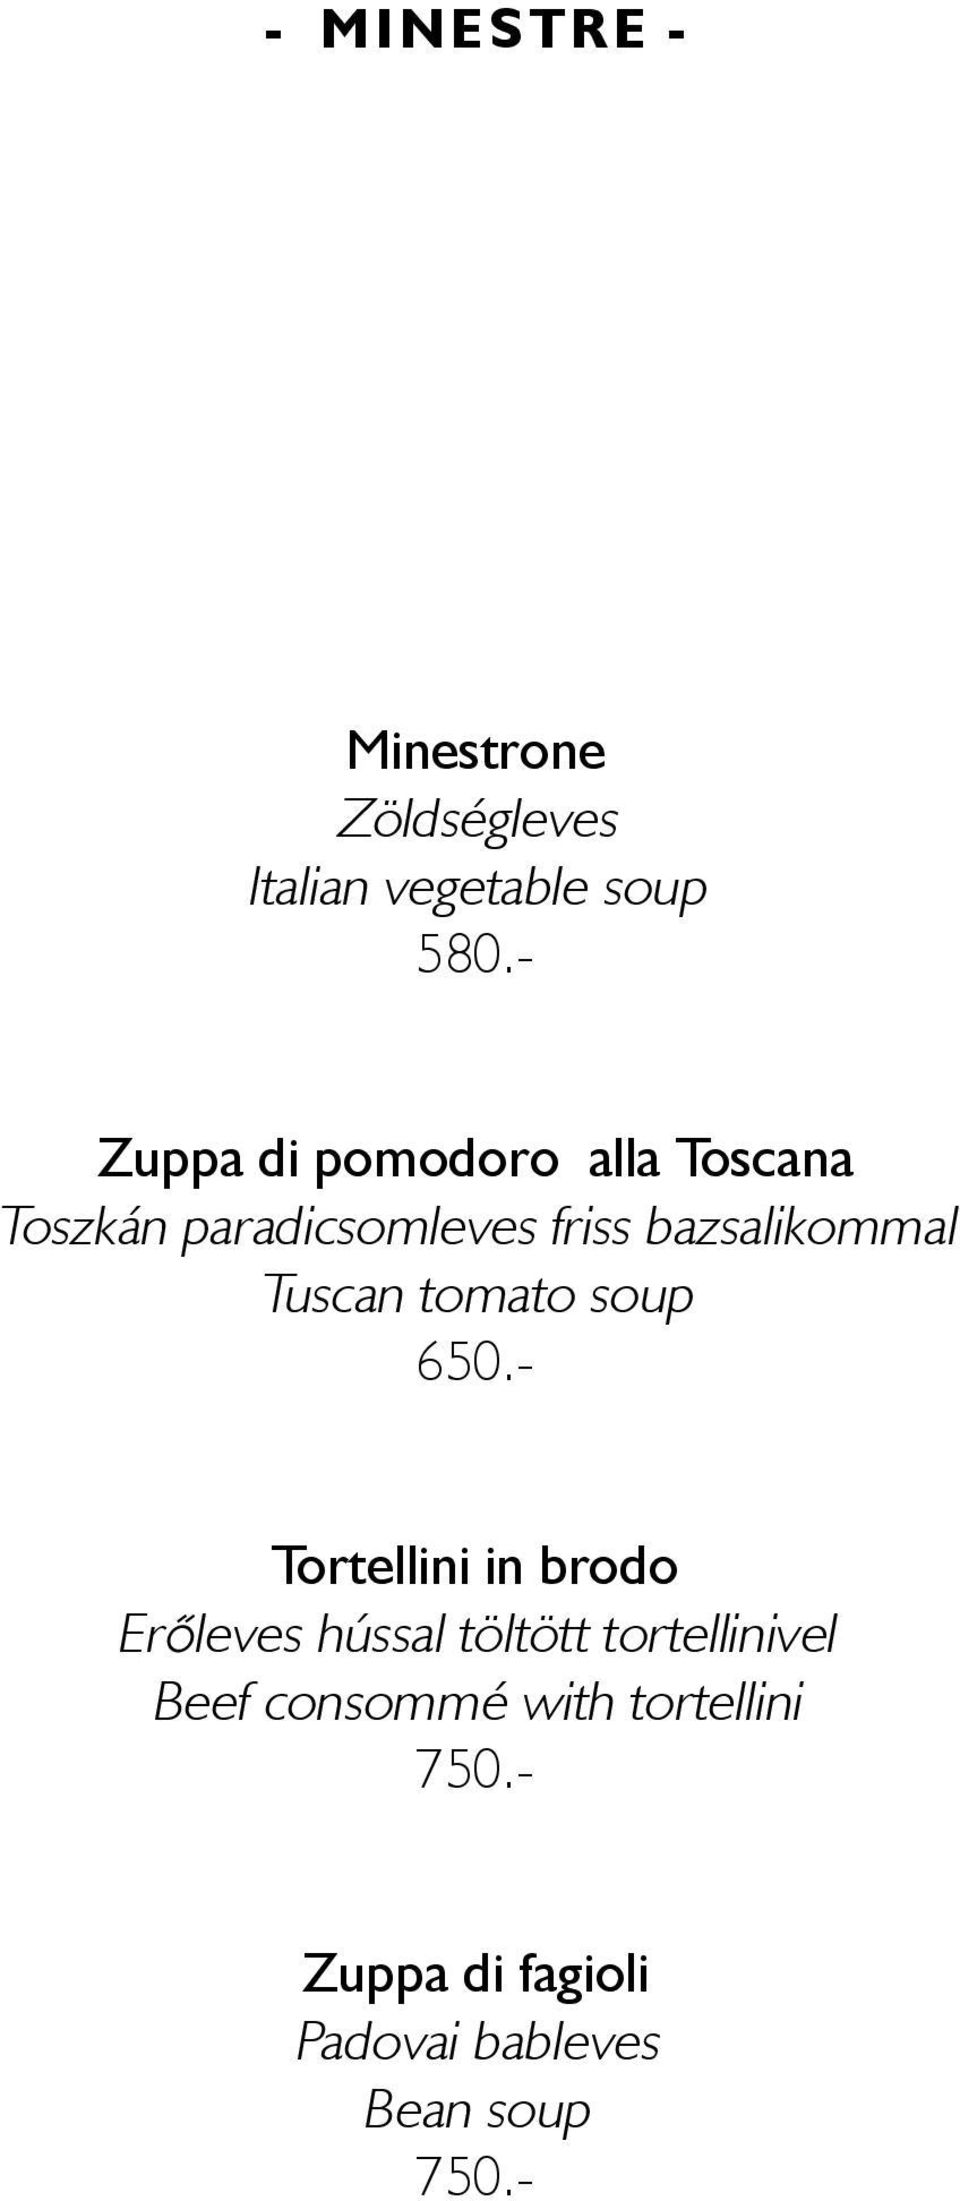 Tuscan tomato soup 650.